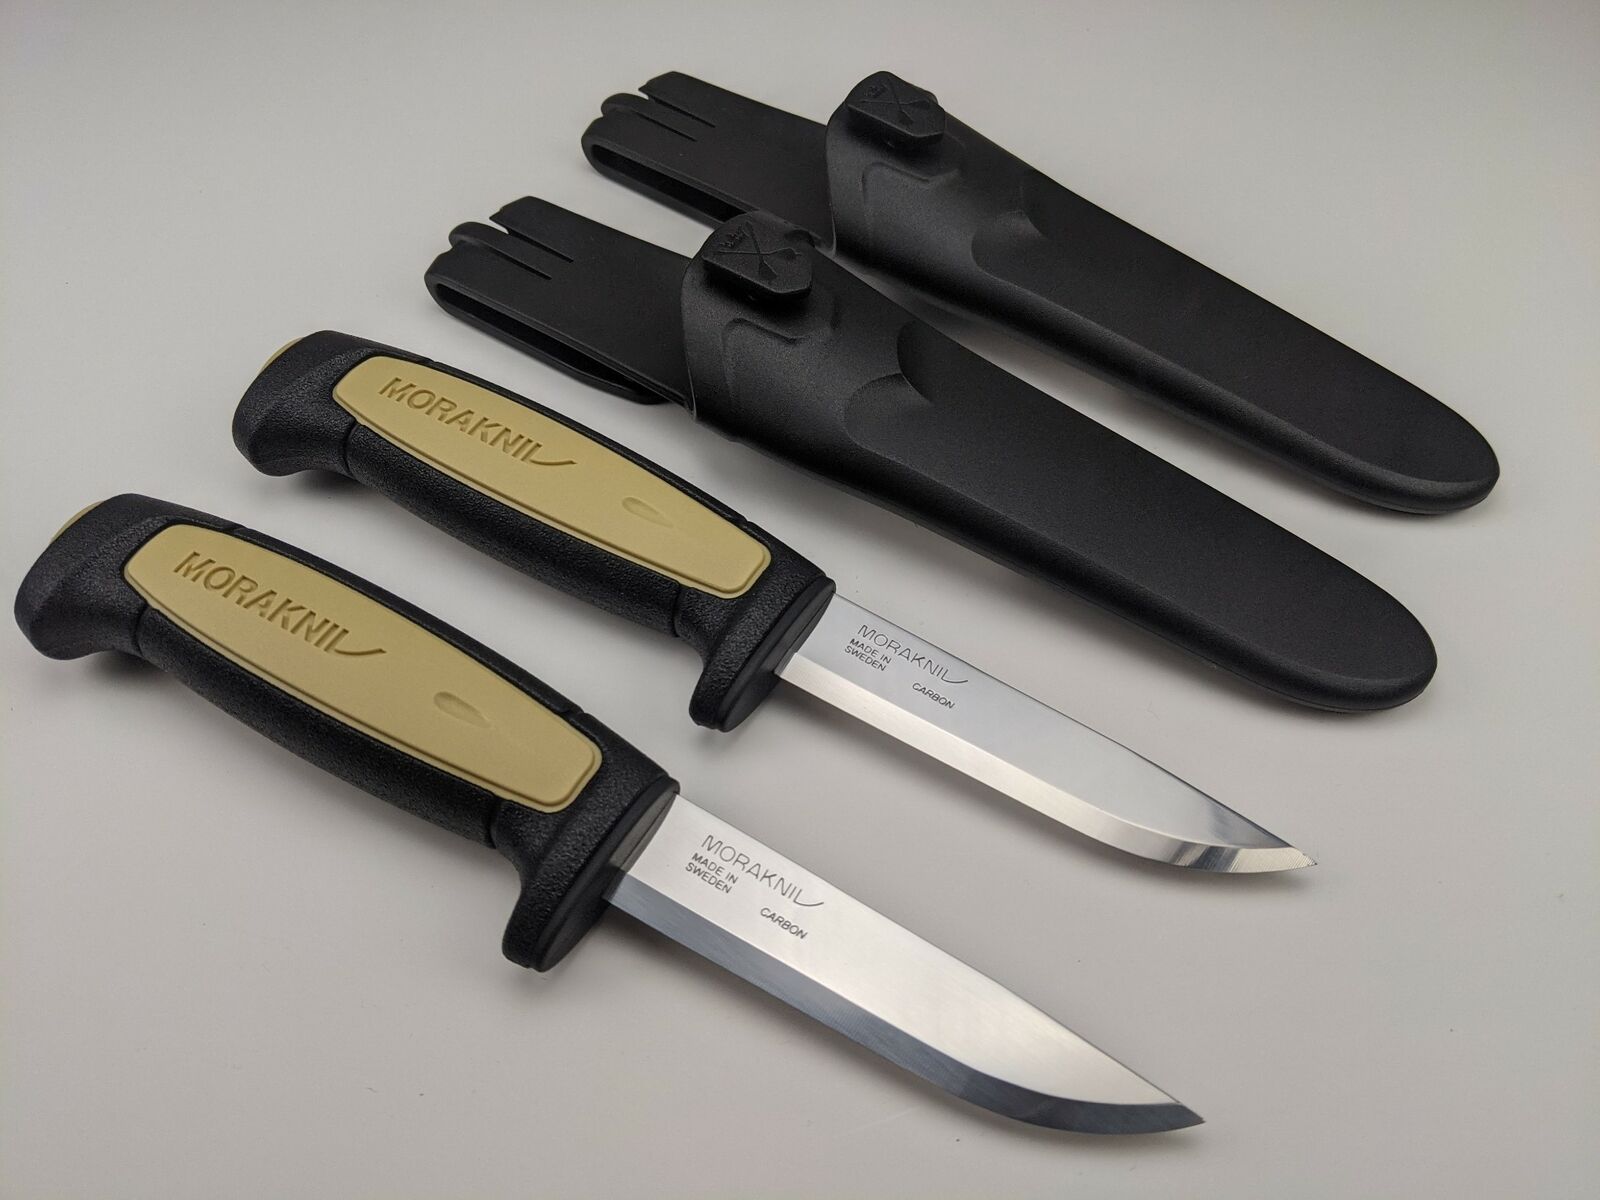 2 Pack Lot - Morakniv Basic 511 Knife & Sheath - 2 Tan/Black Handle Mora Knives Morakniv